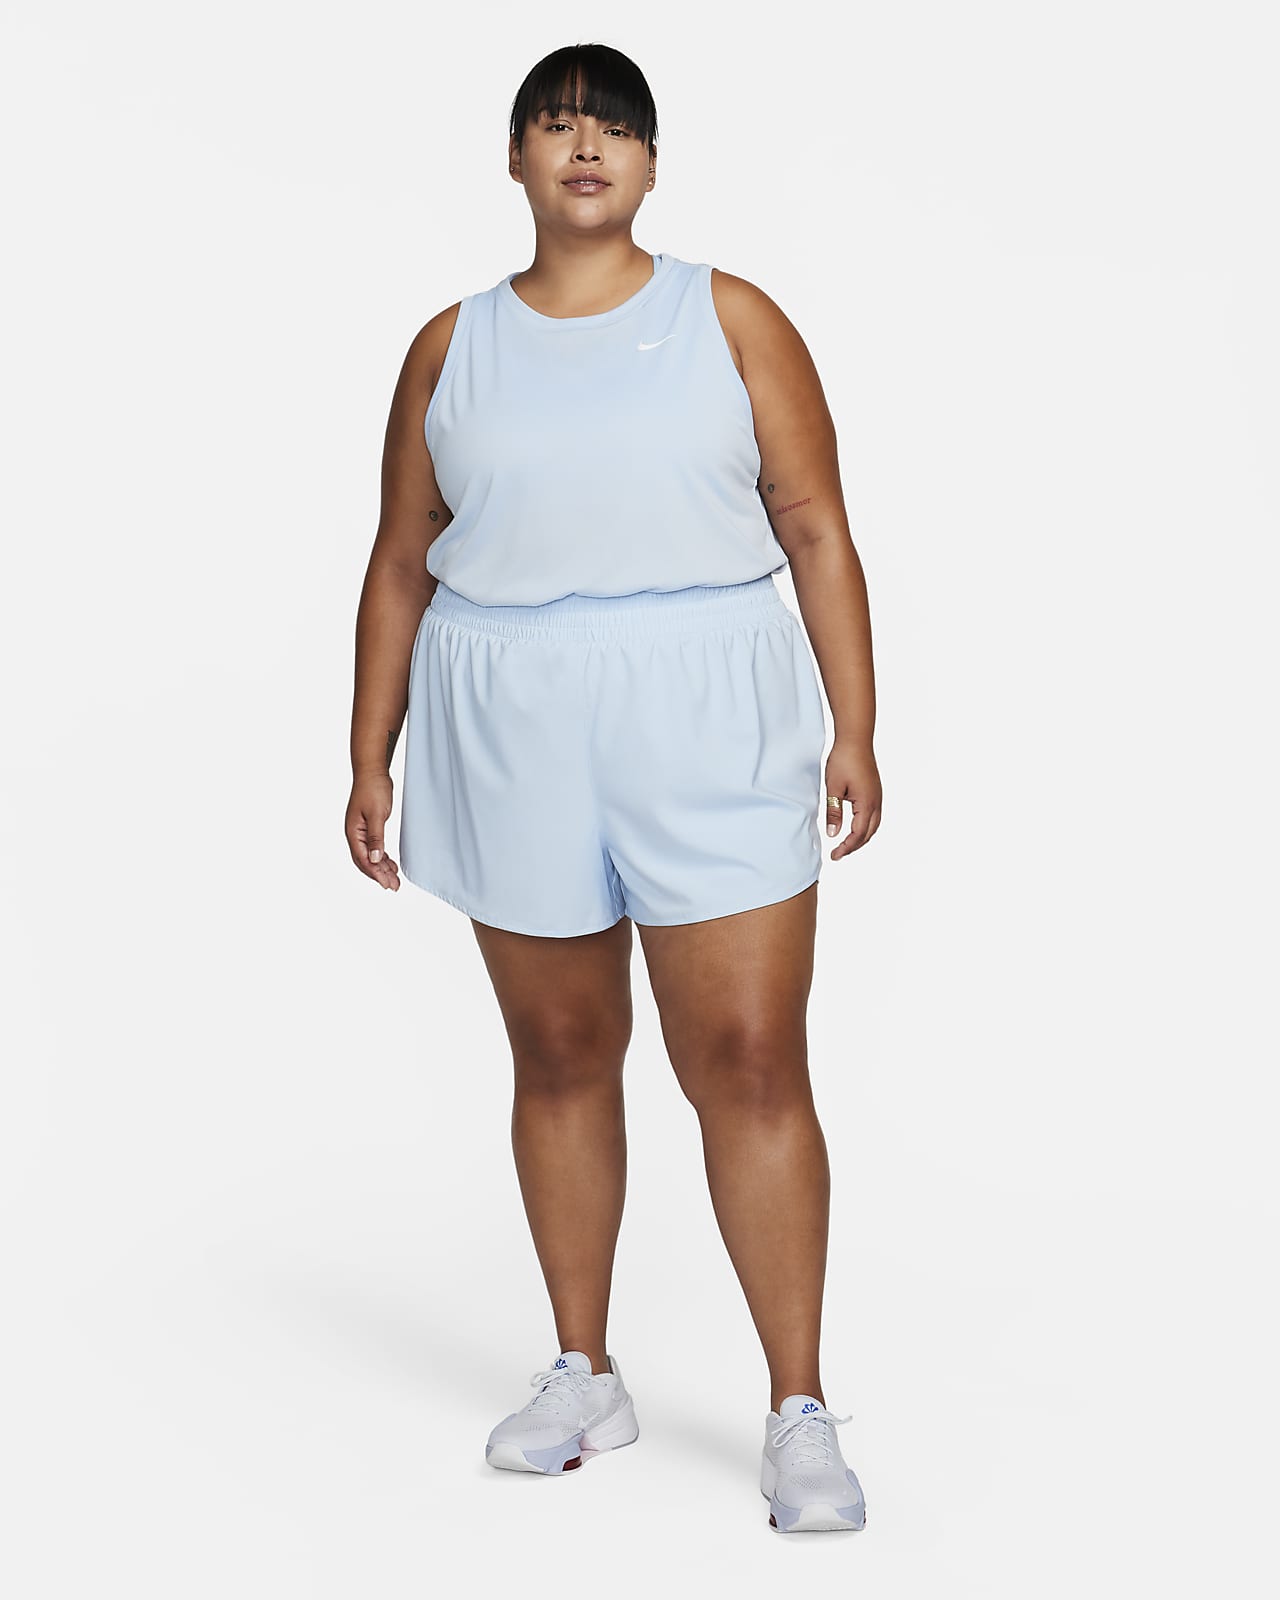 Nike, Tops, Nike Drifit Womens Tank Top Size Small